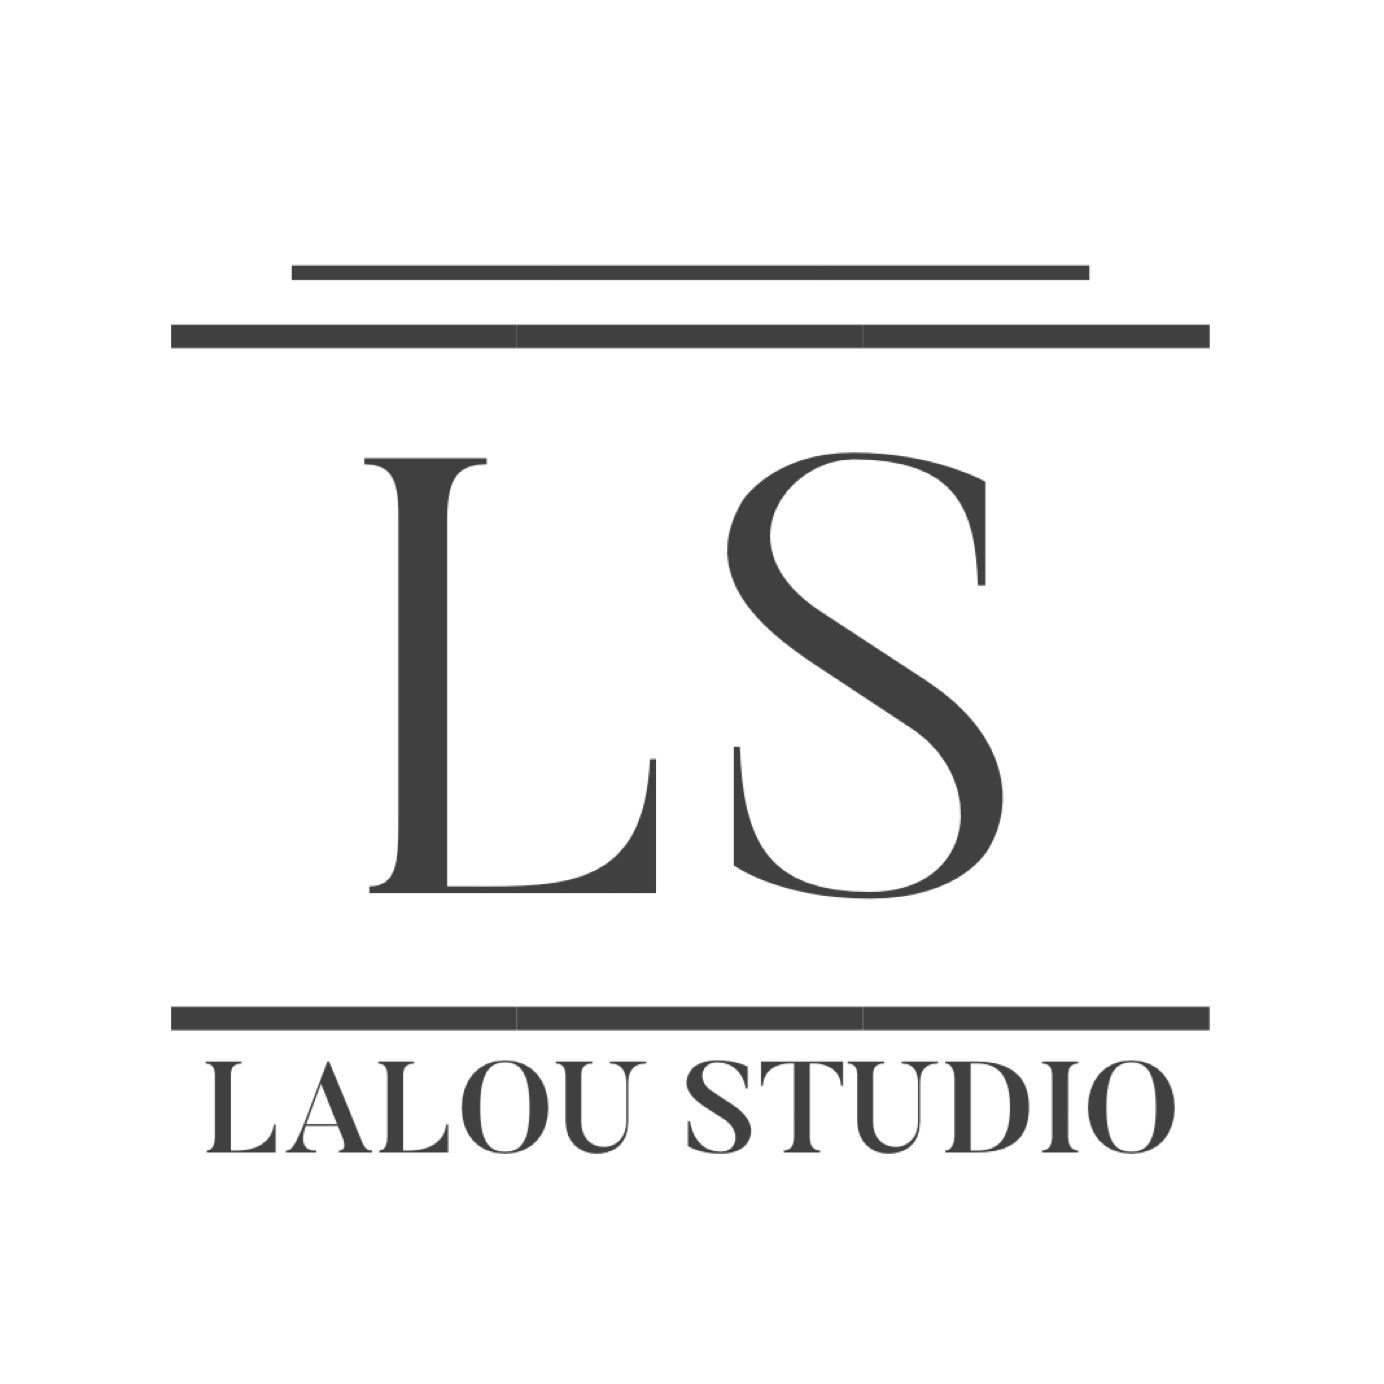 Lalou Studio